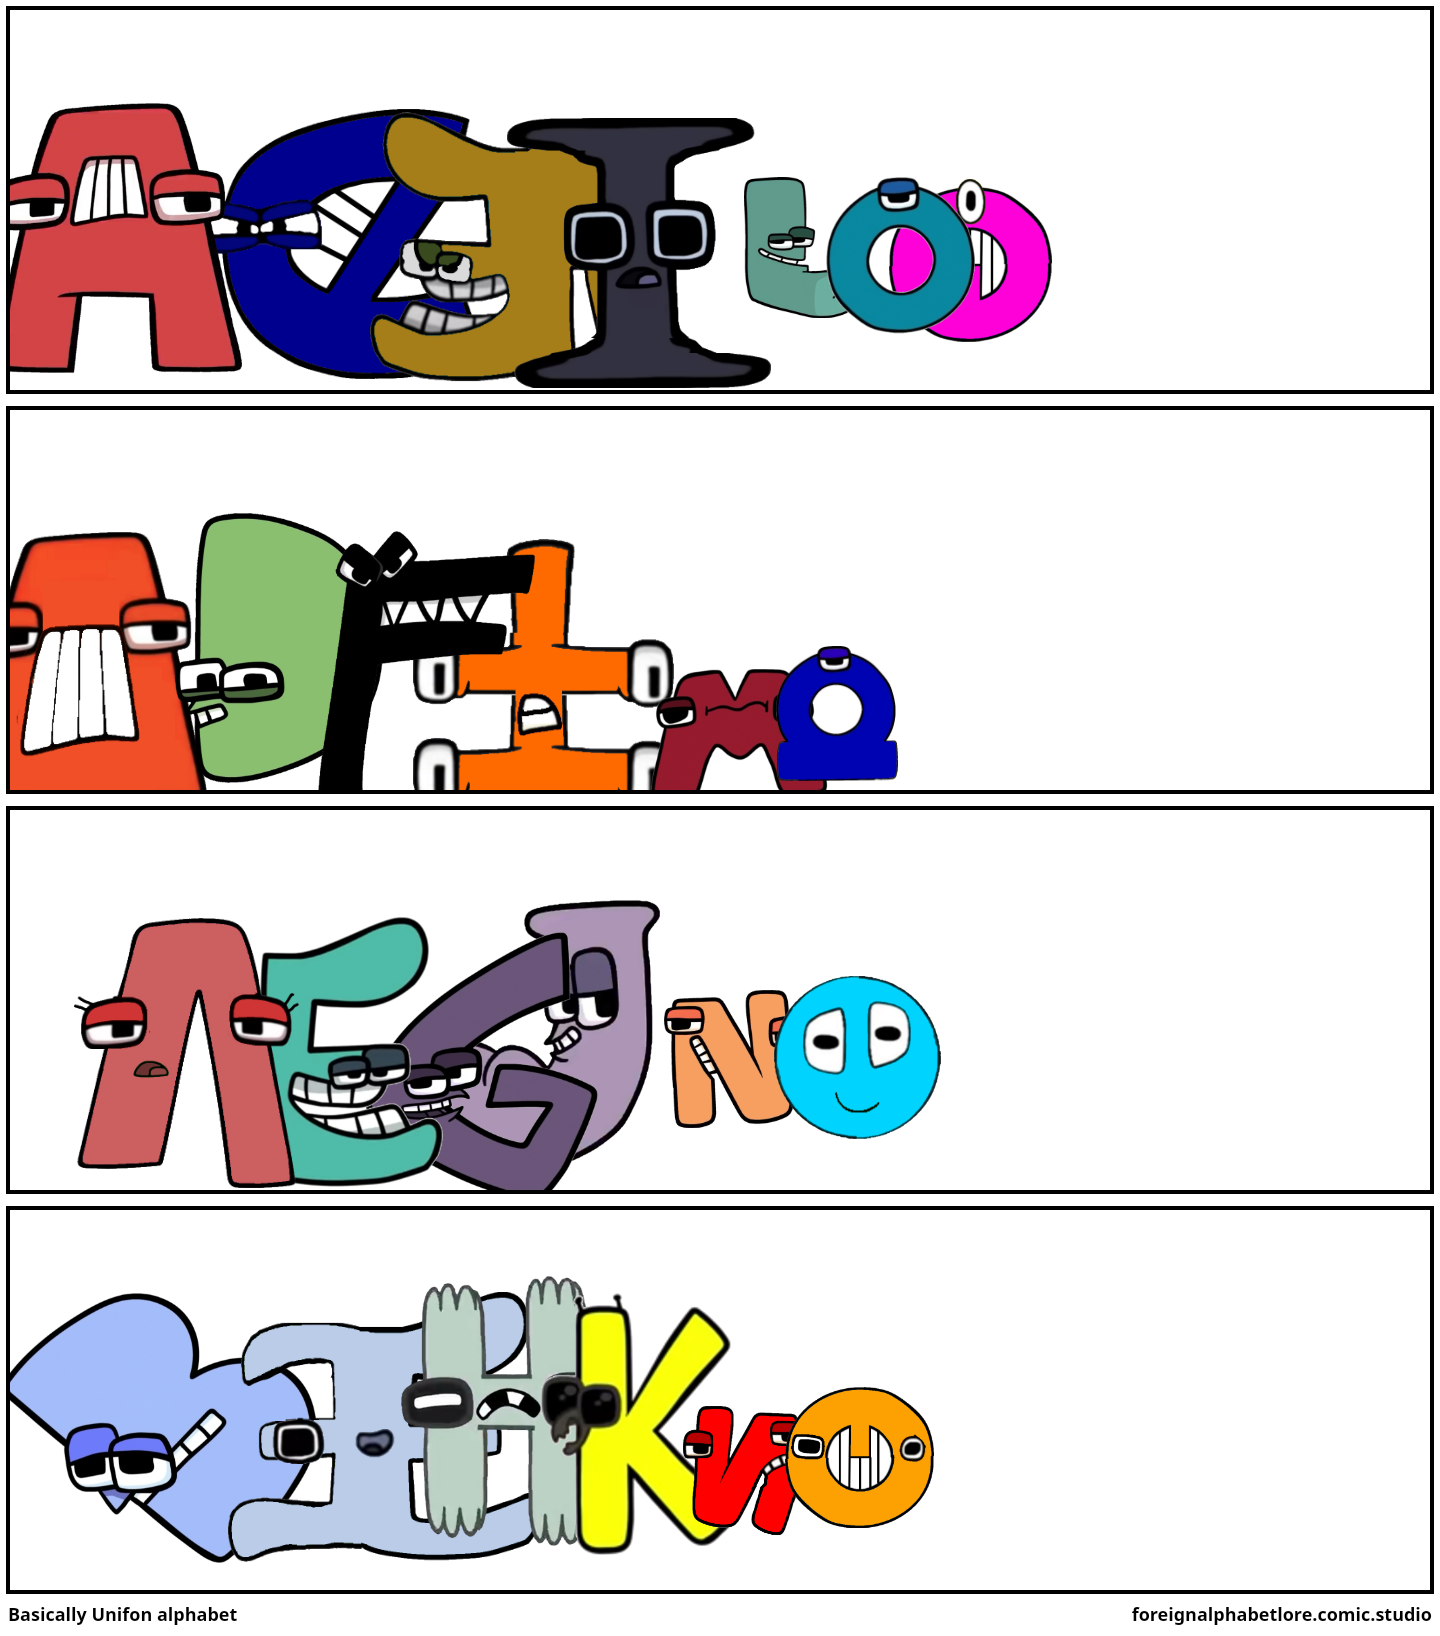 Basically Unifon alphabet